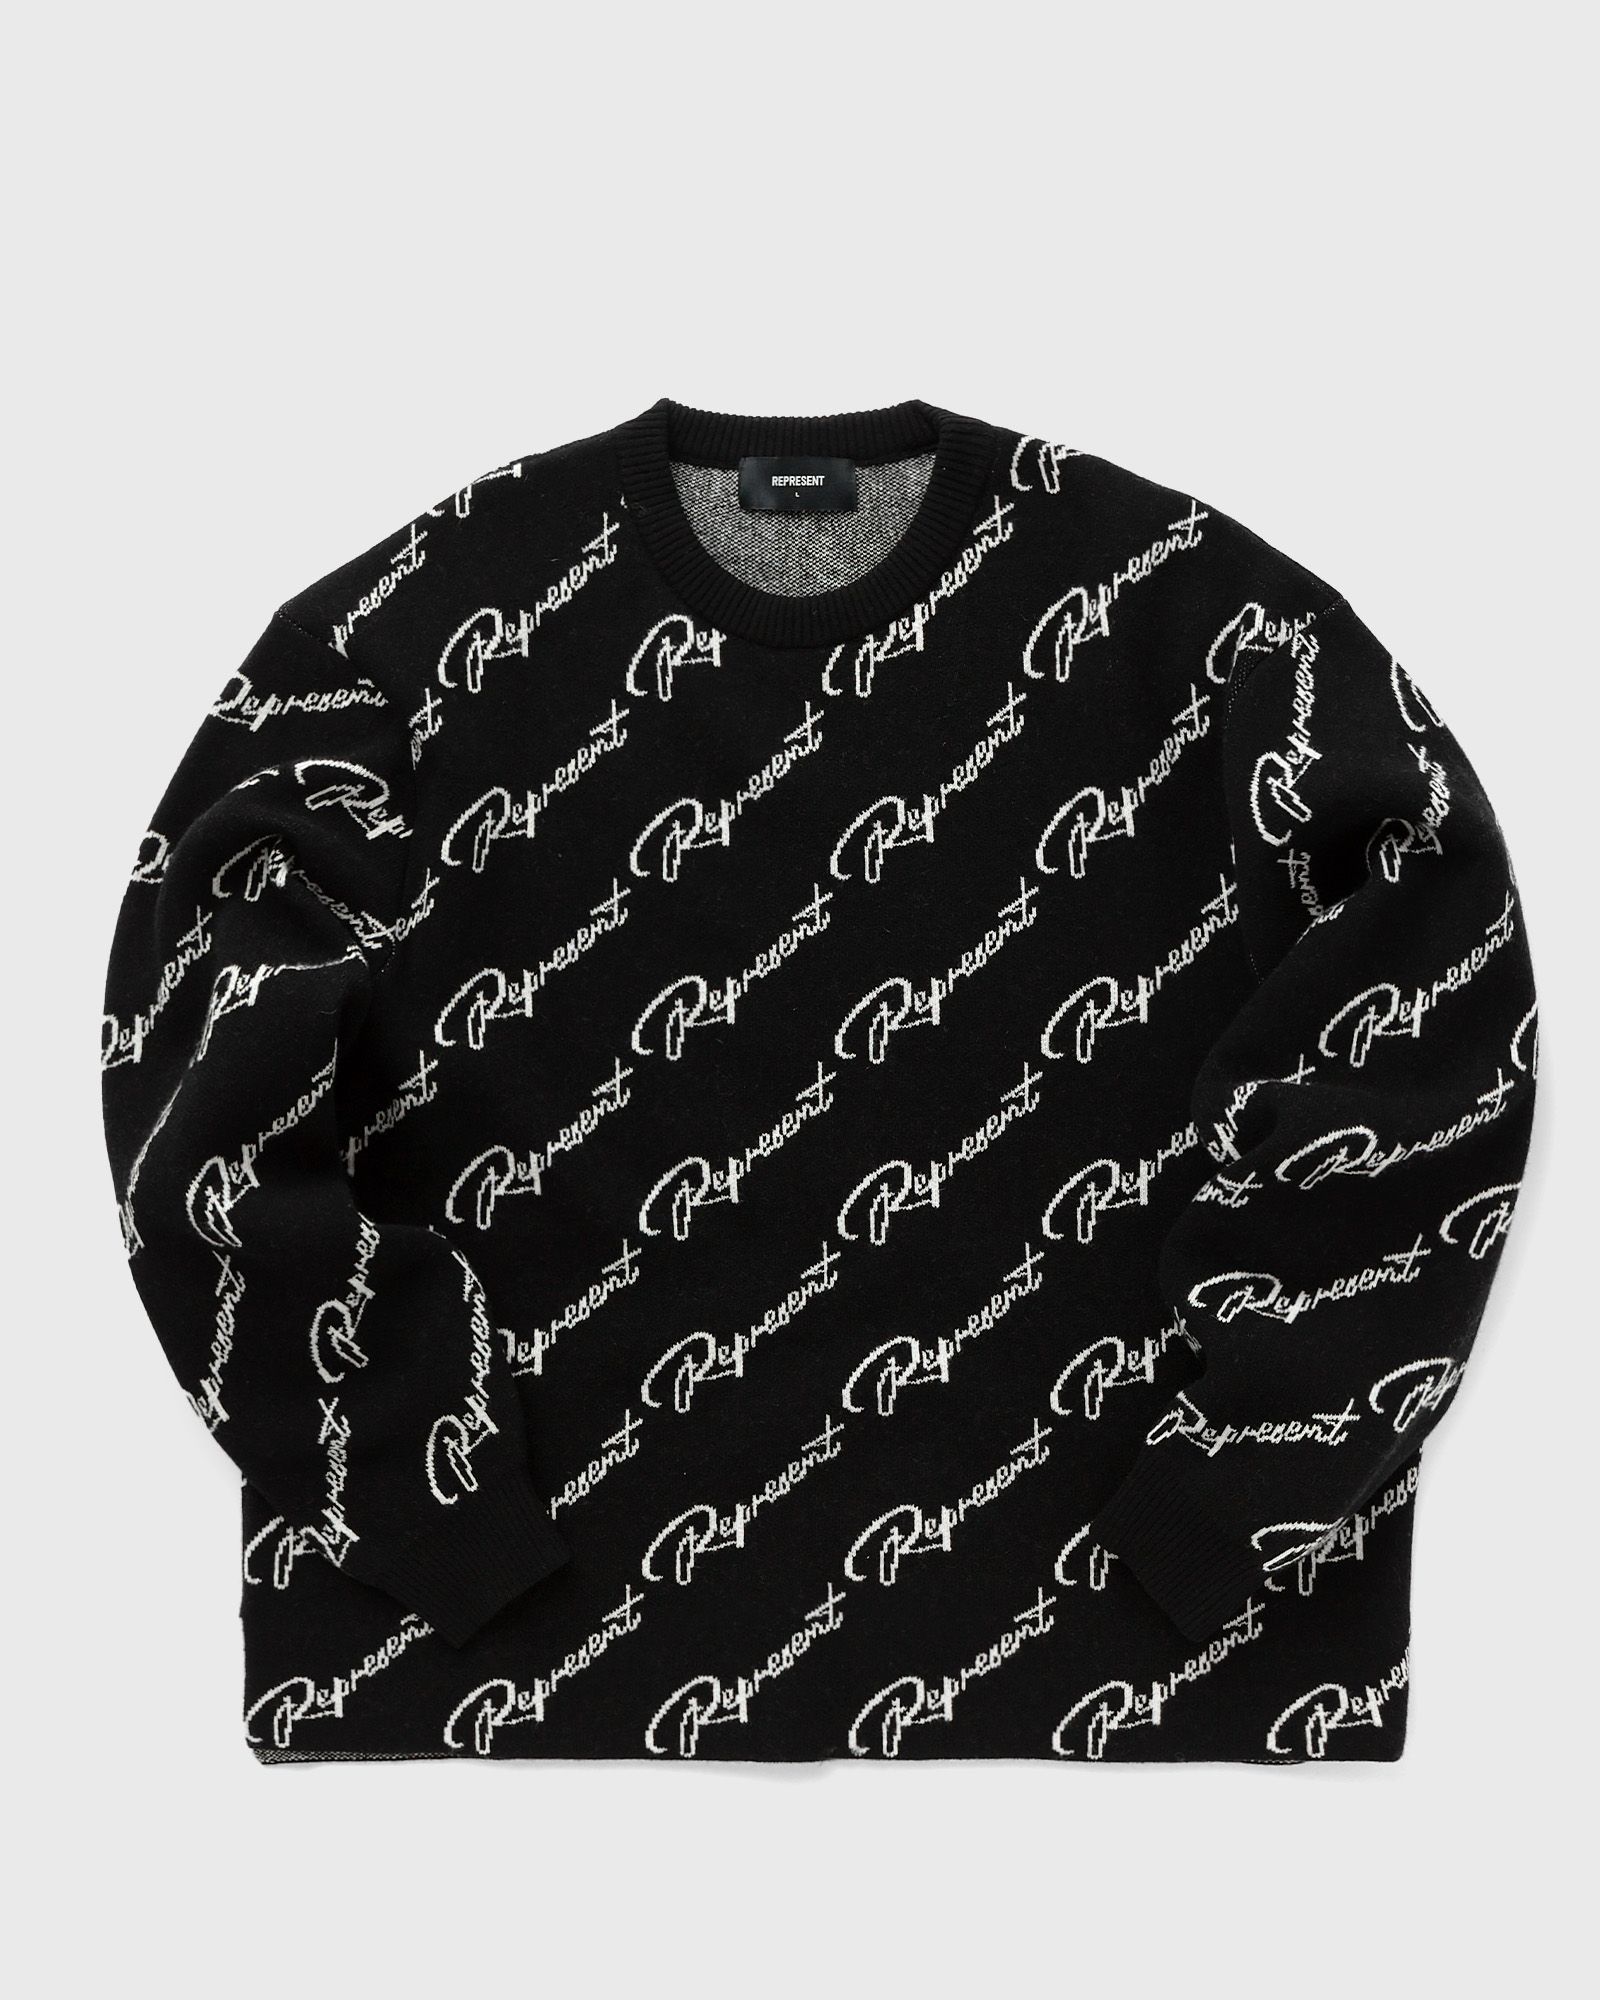 Represent - jaquard sweater men pullovers black in größe:xl